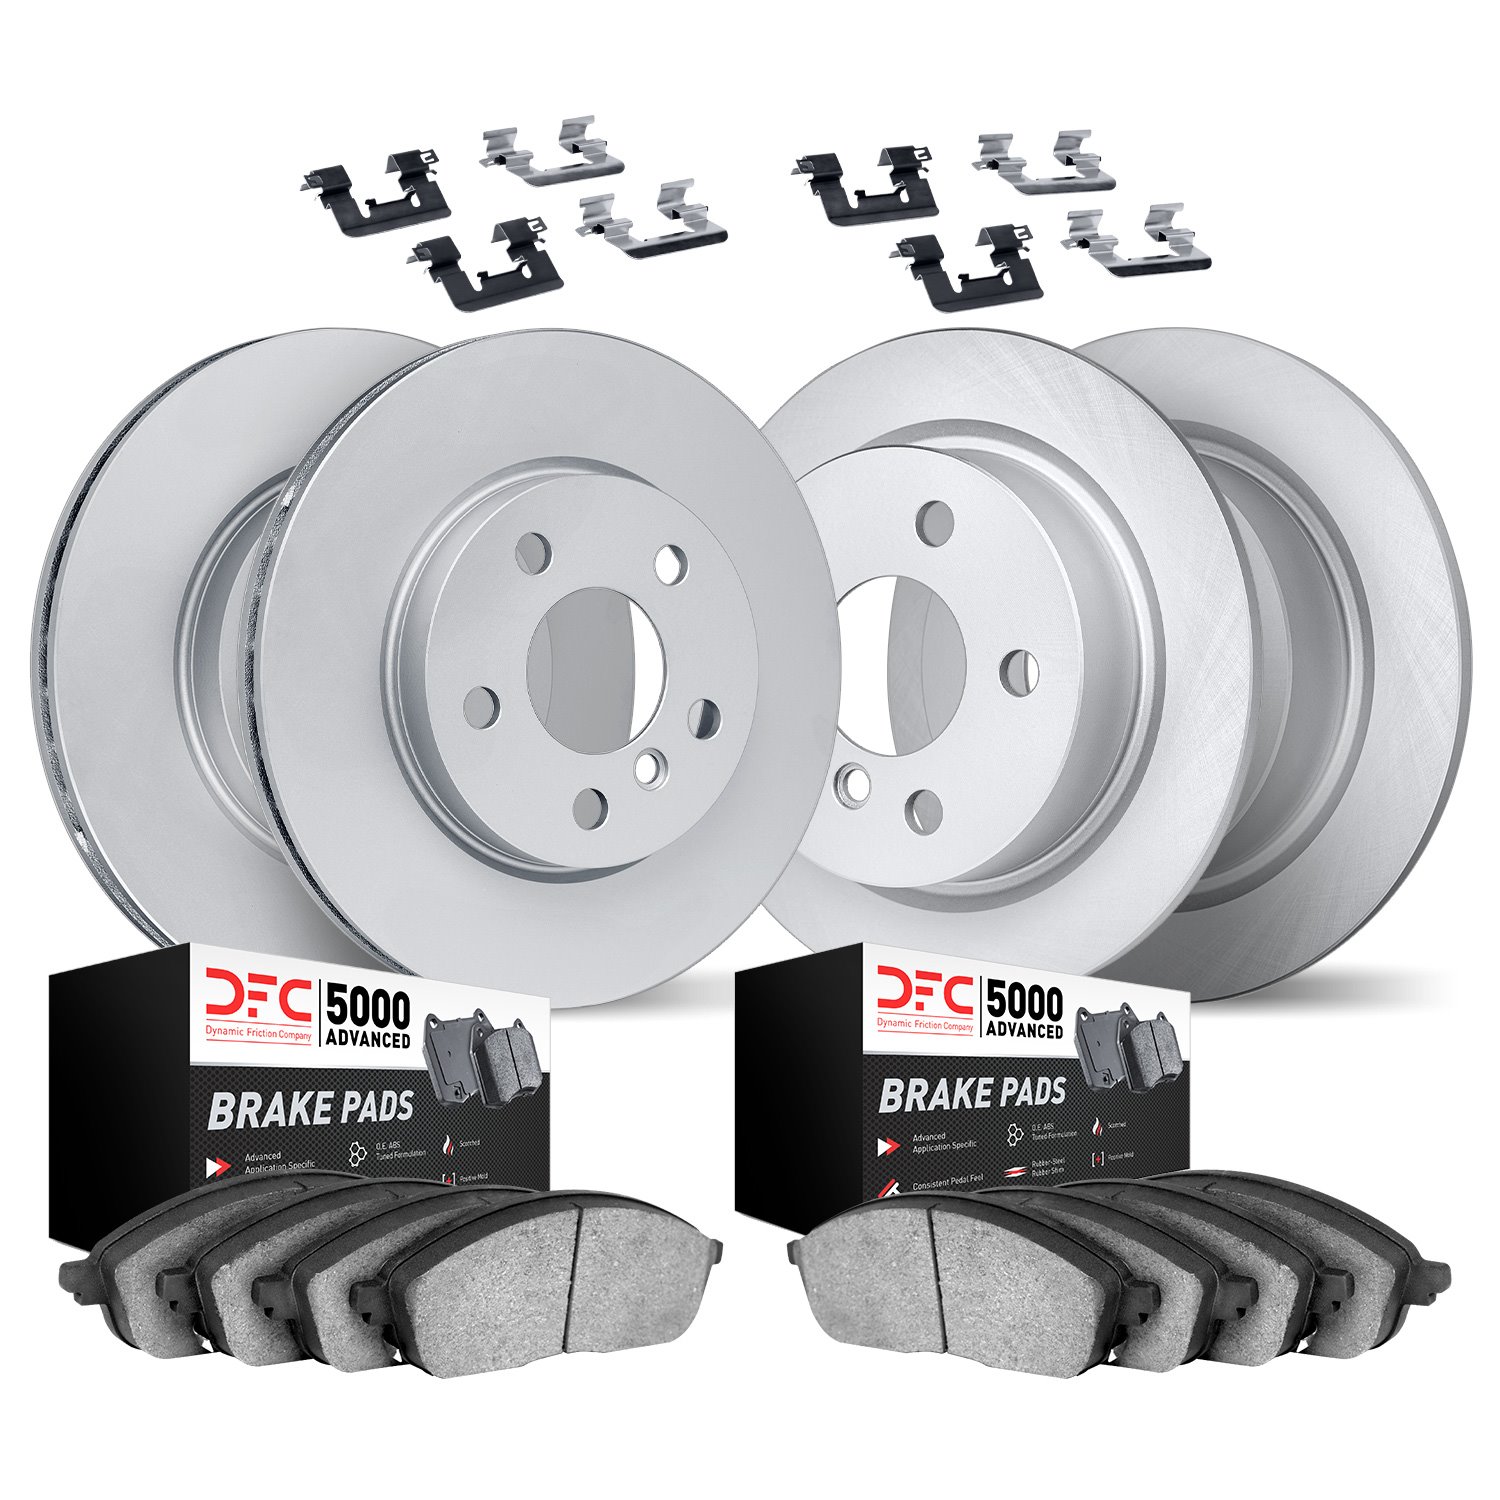 9514-32000 GEOMET Brake Rotors w/5000 Advanced Brake Pads Kit & Hardware, Fits Select Mini, Position: Front and Rear